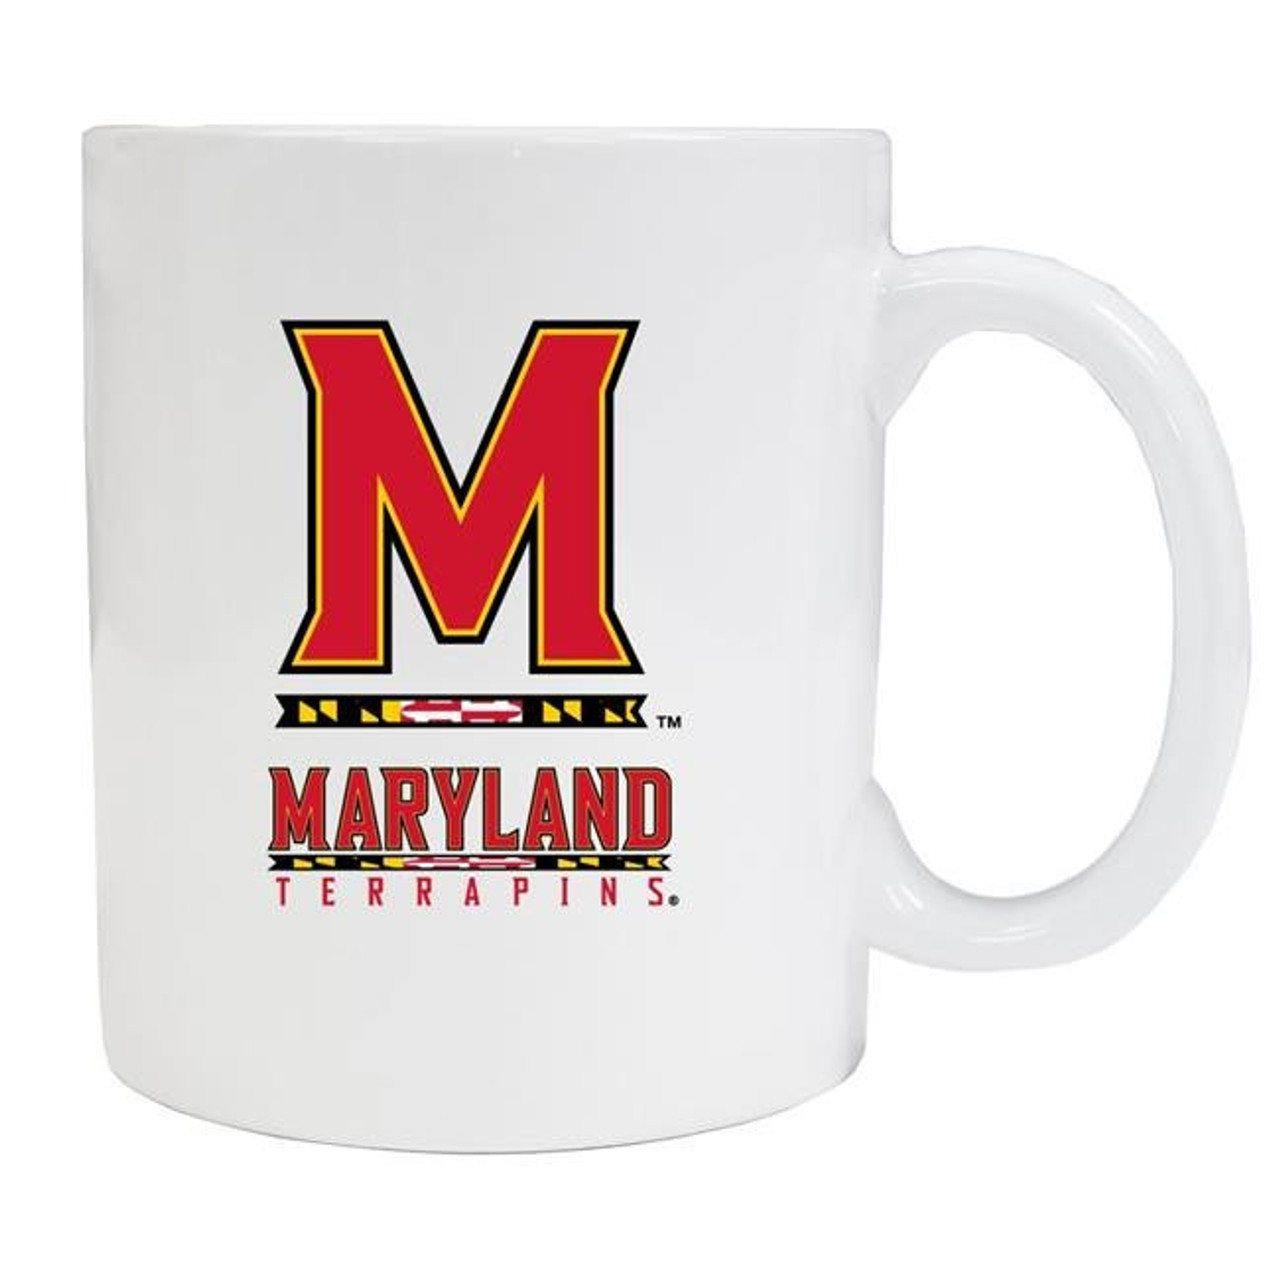 Maryland Terrapins White Ceramic Mug 2-Pack (White).